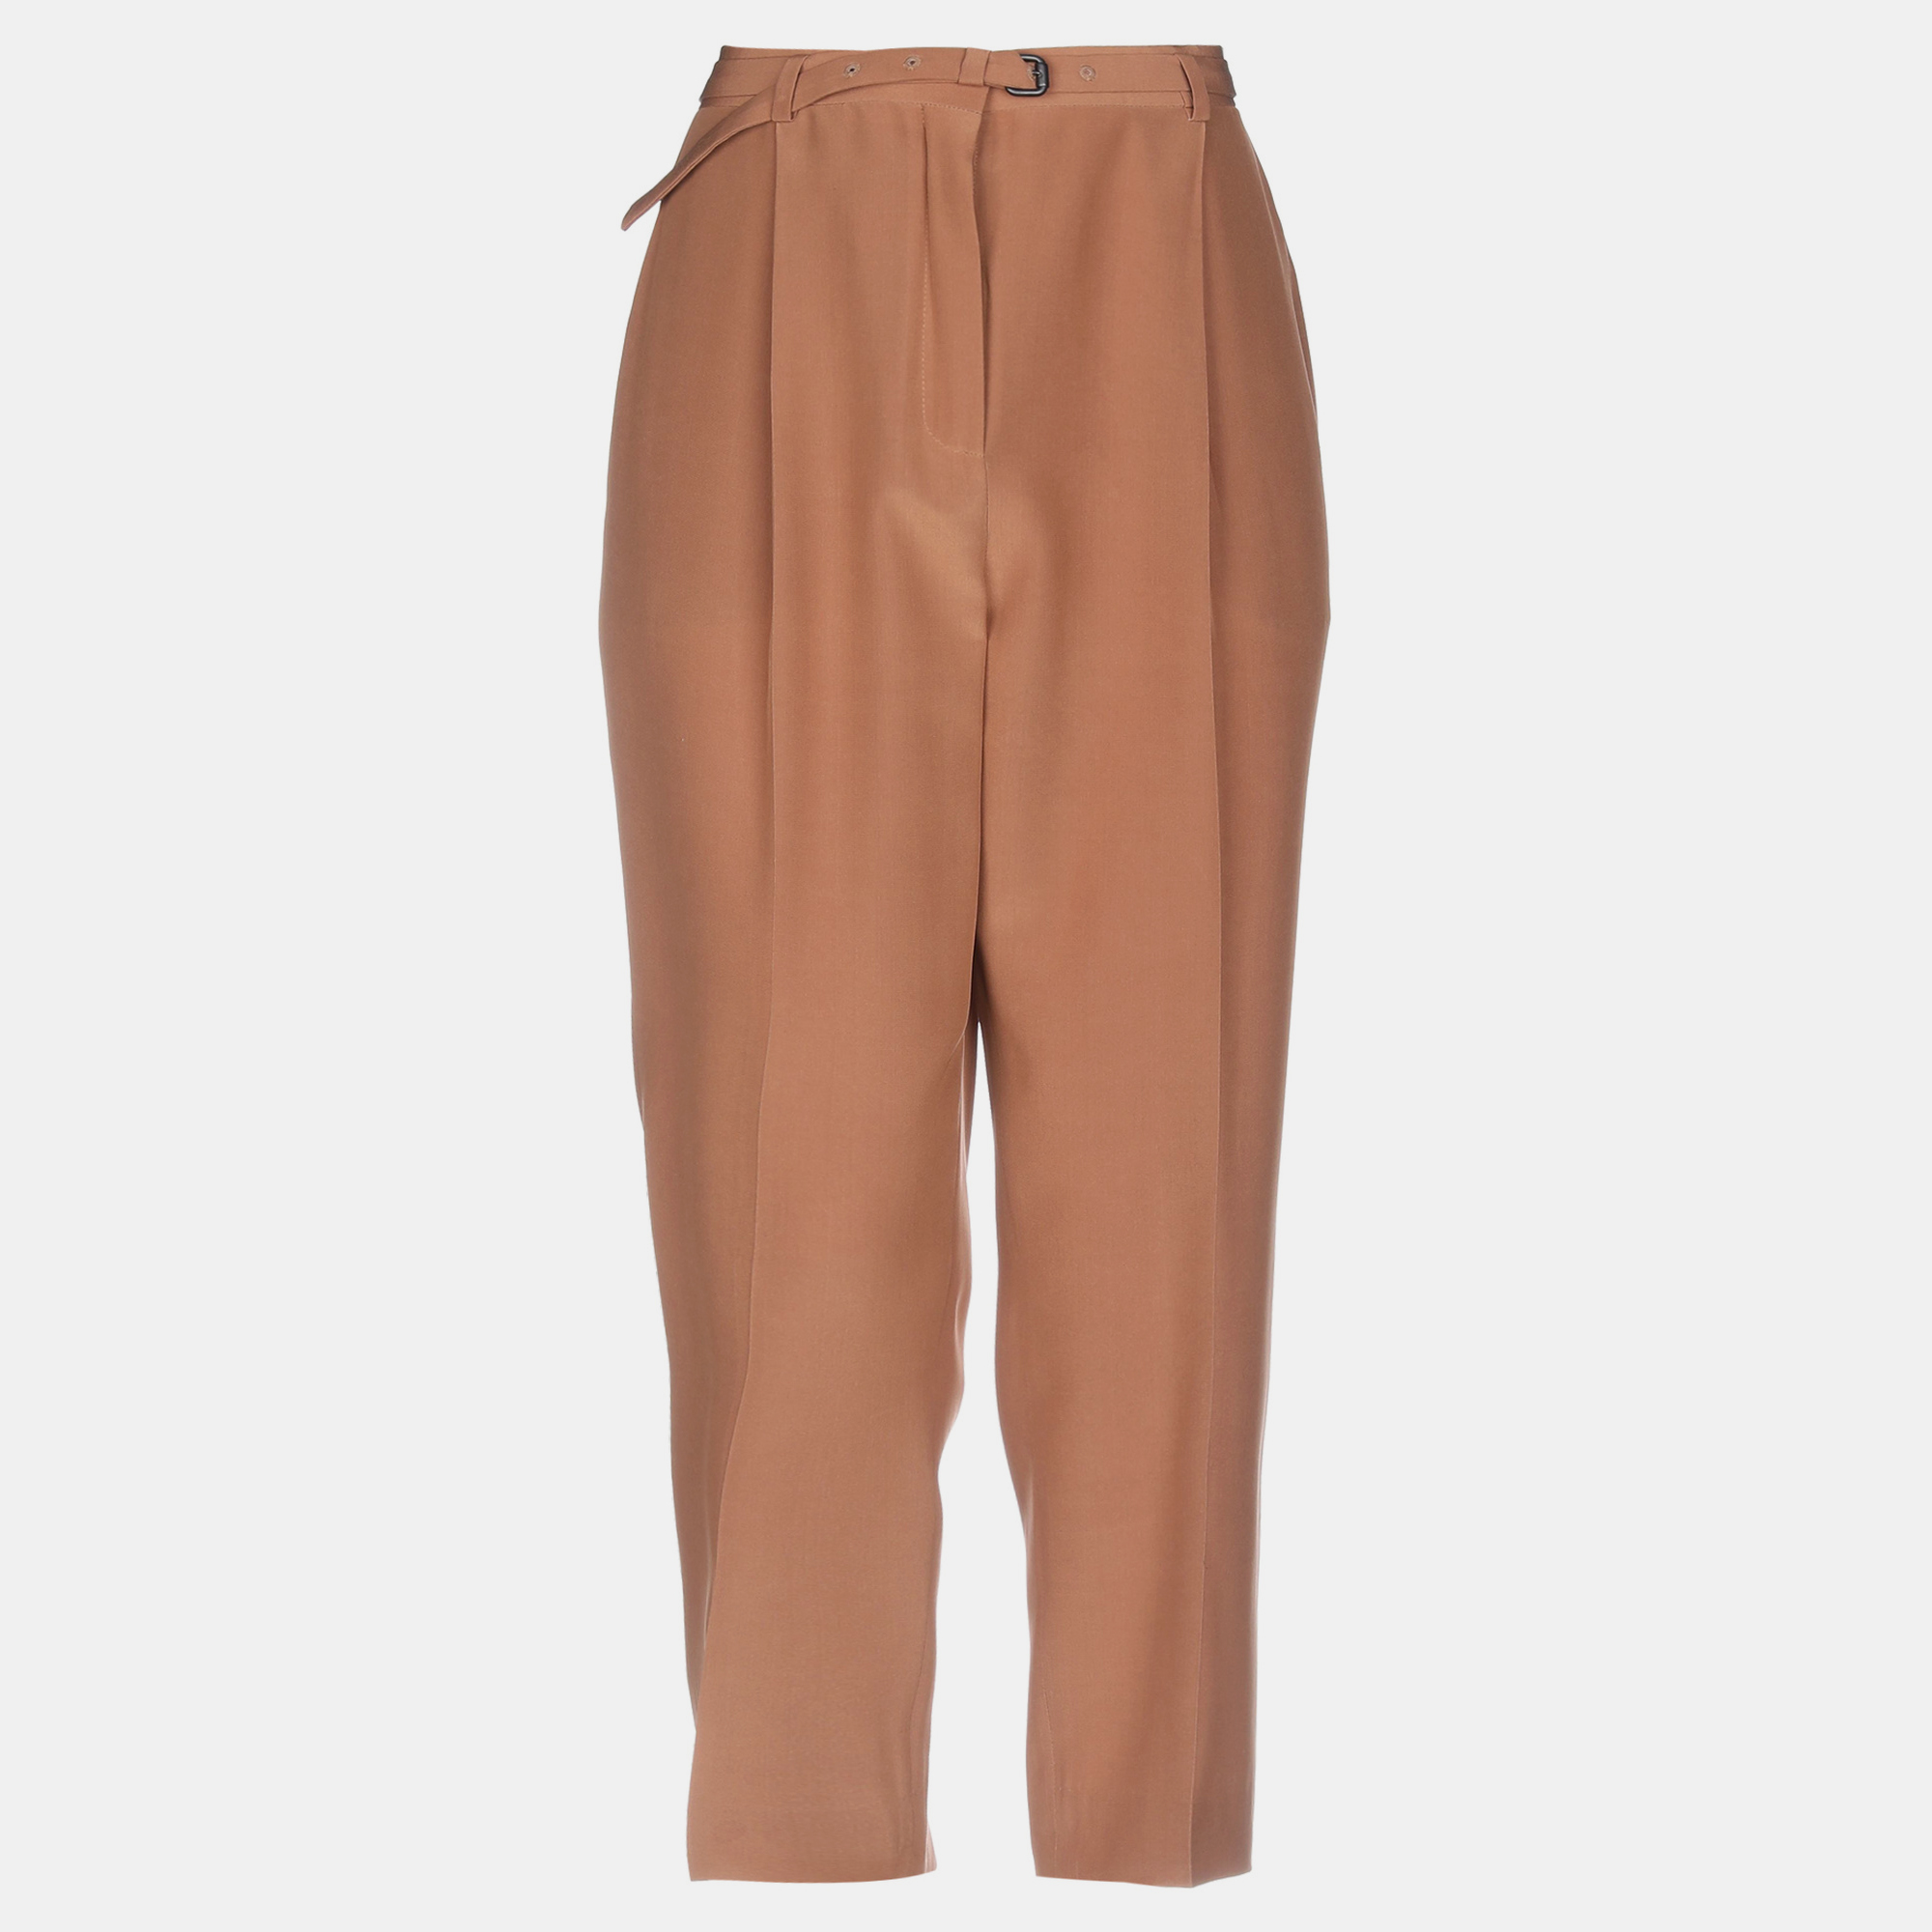 Bottega veneta brown crepe trousers size 42